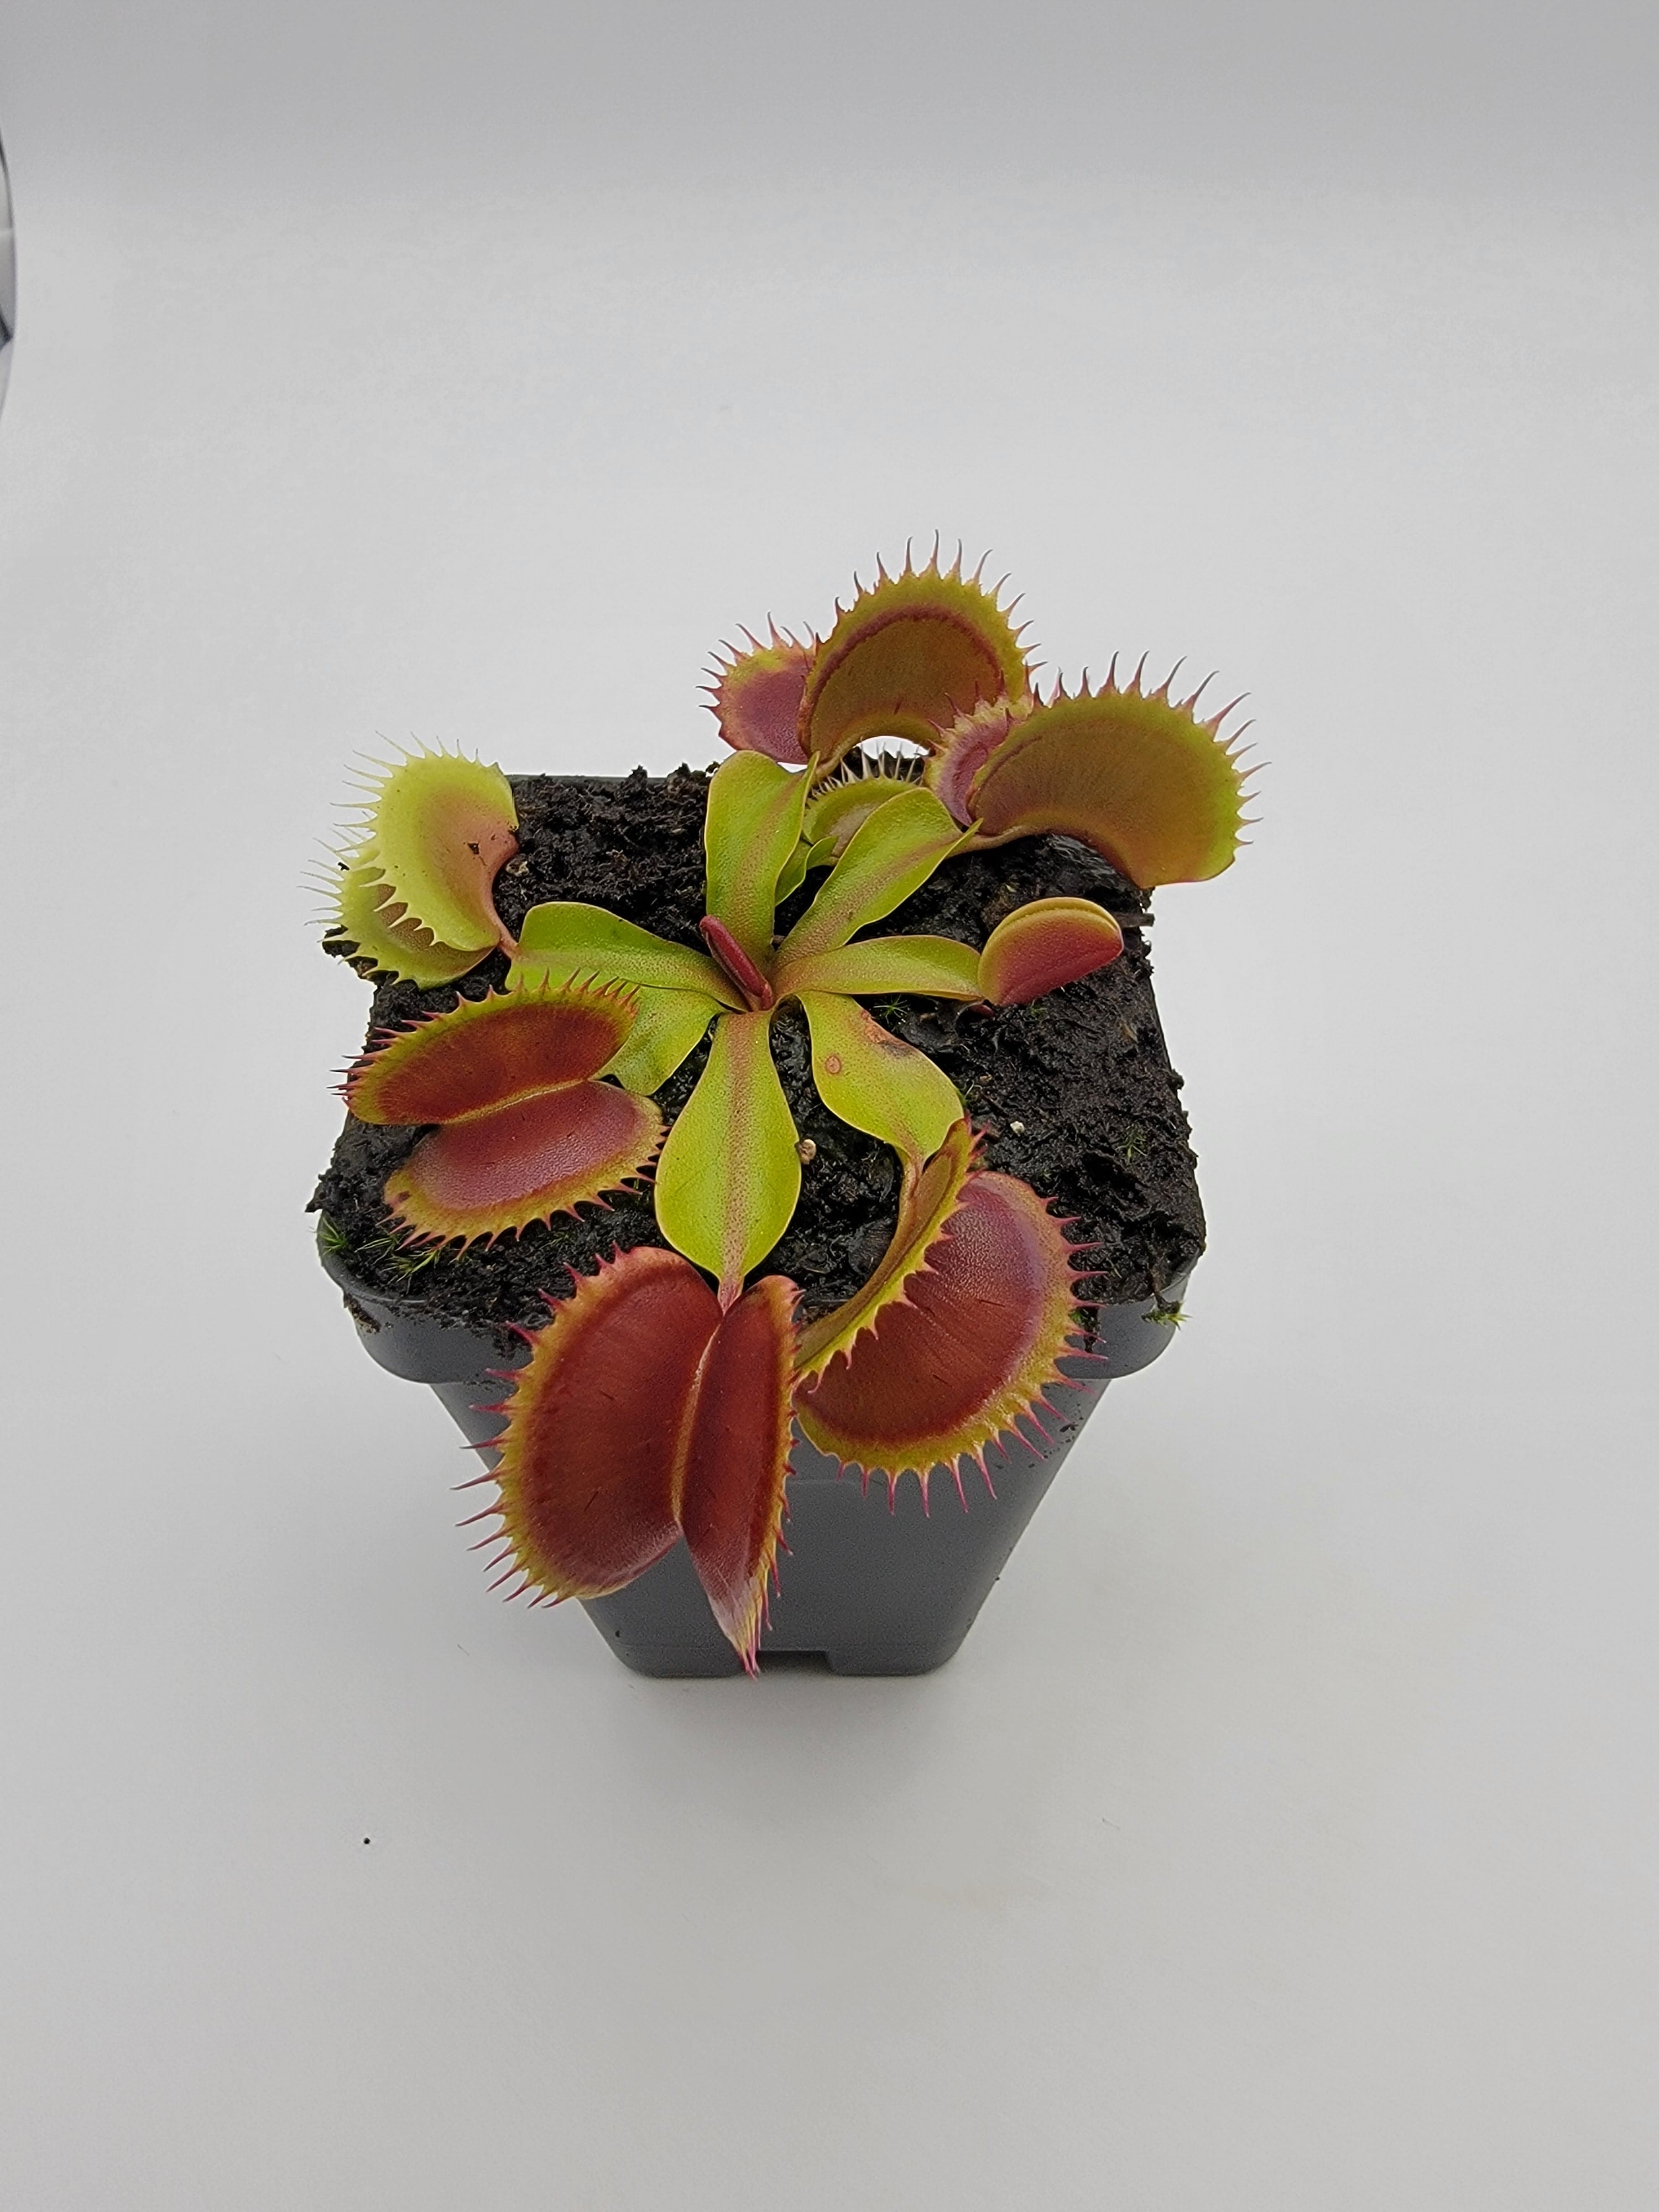 Venus flytrap (Dionaea muscipula) 'FTS Flaming Lips' - Rainbow Carnivorous Plants LLC